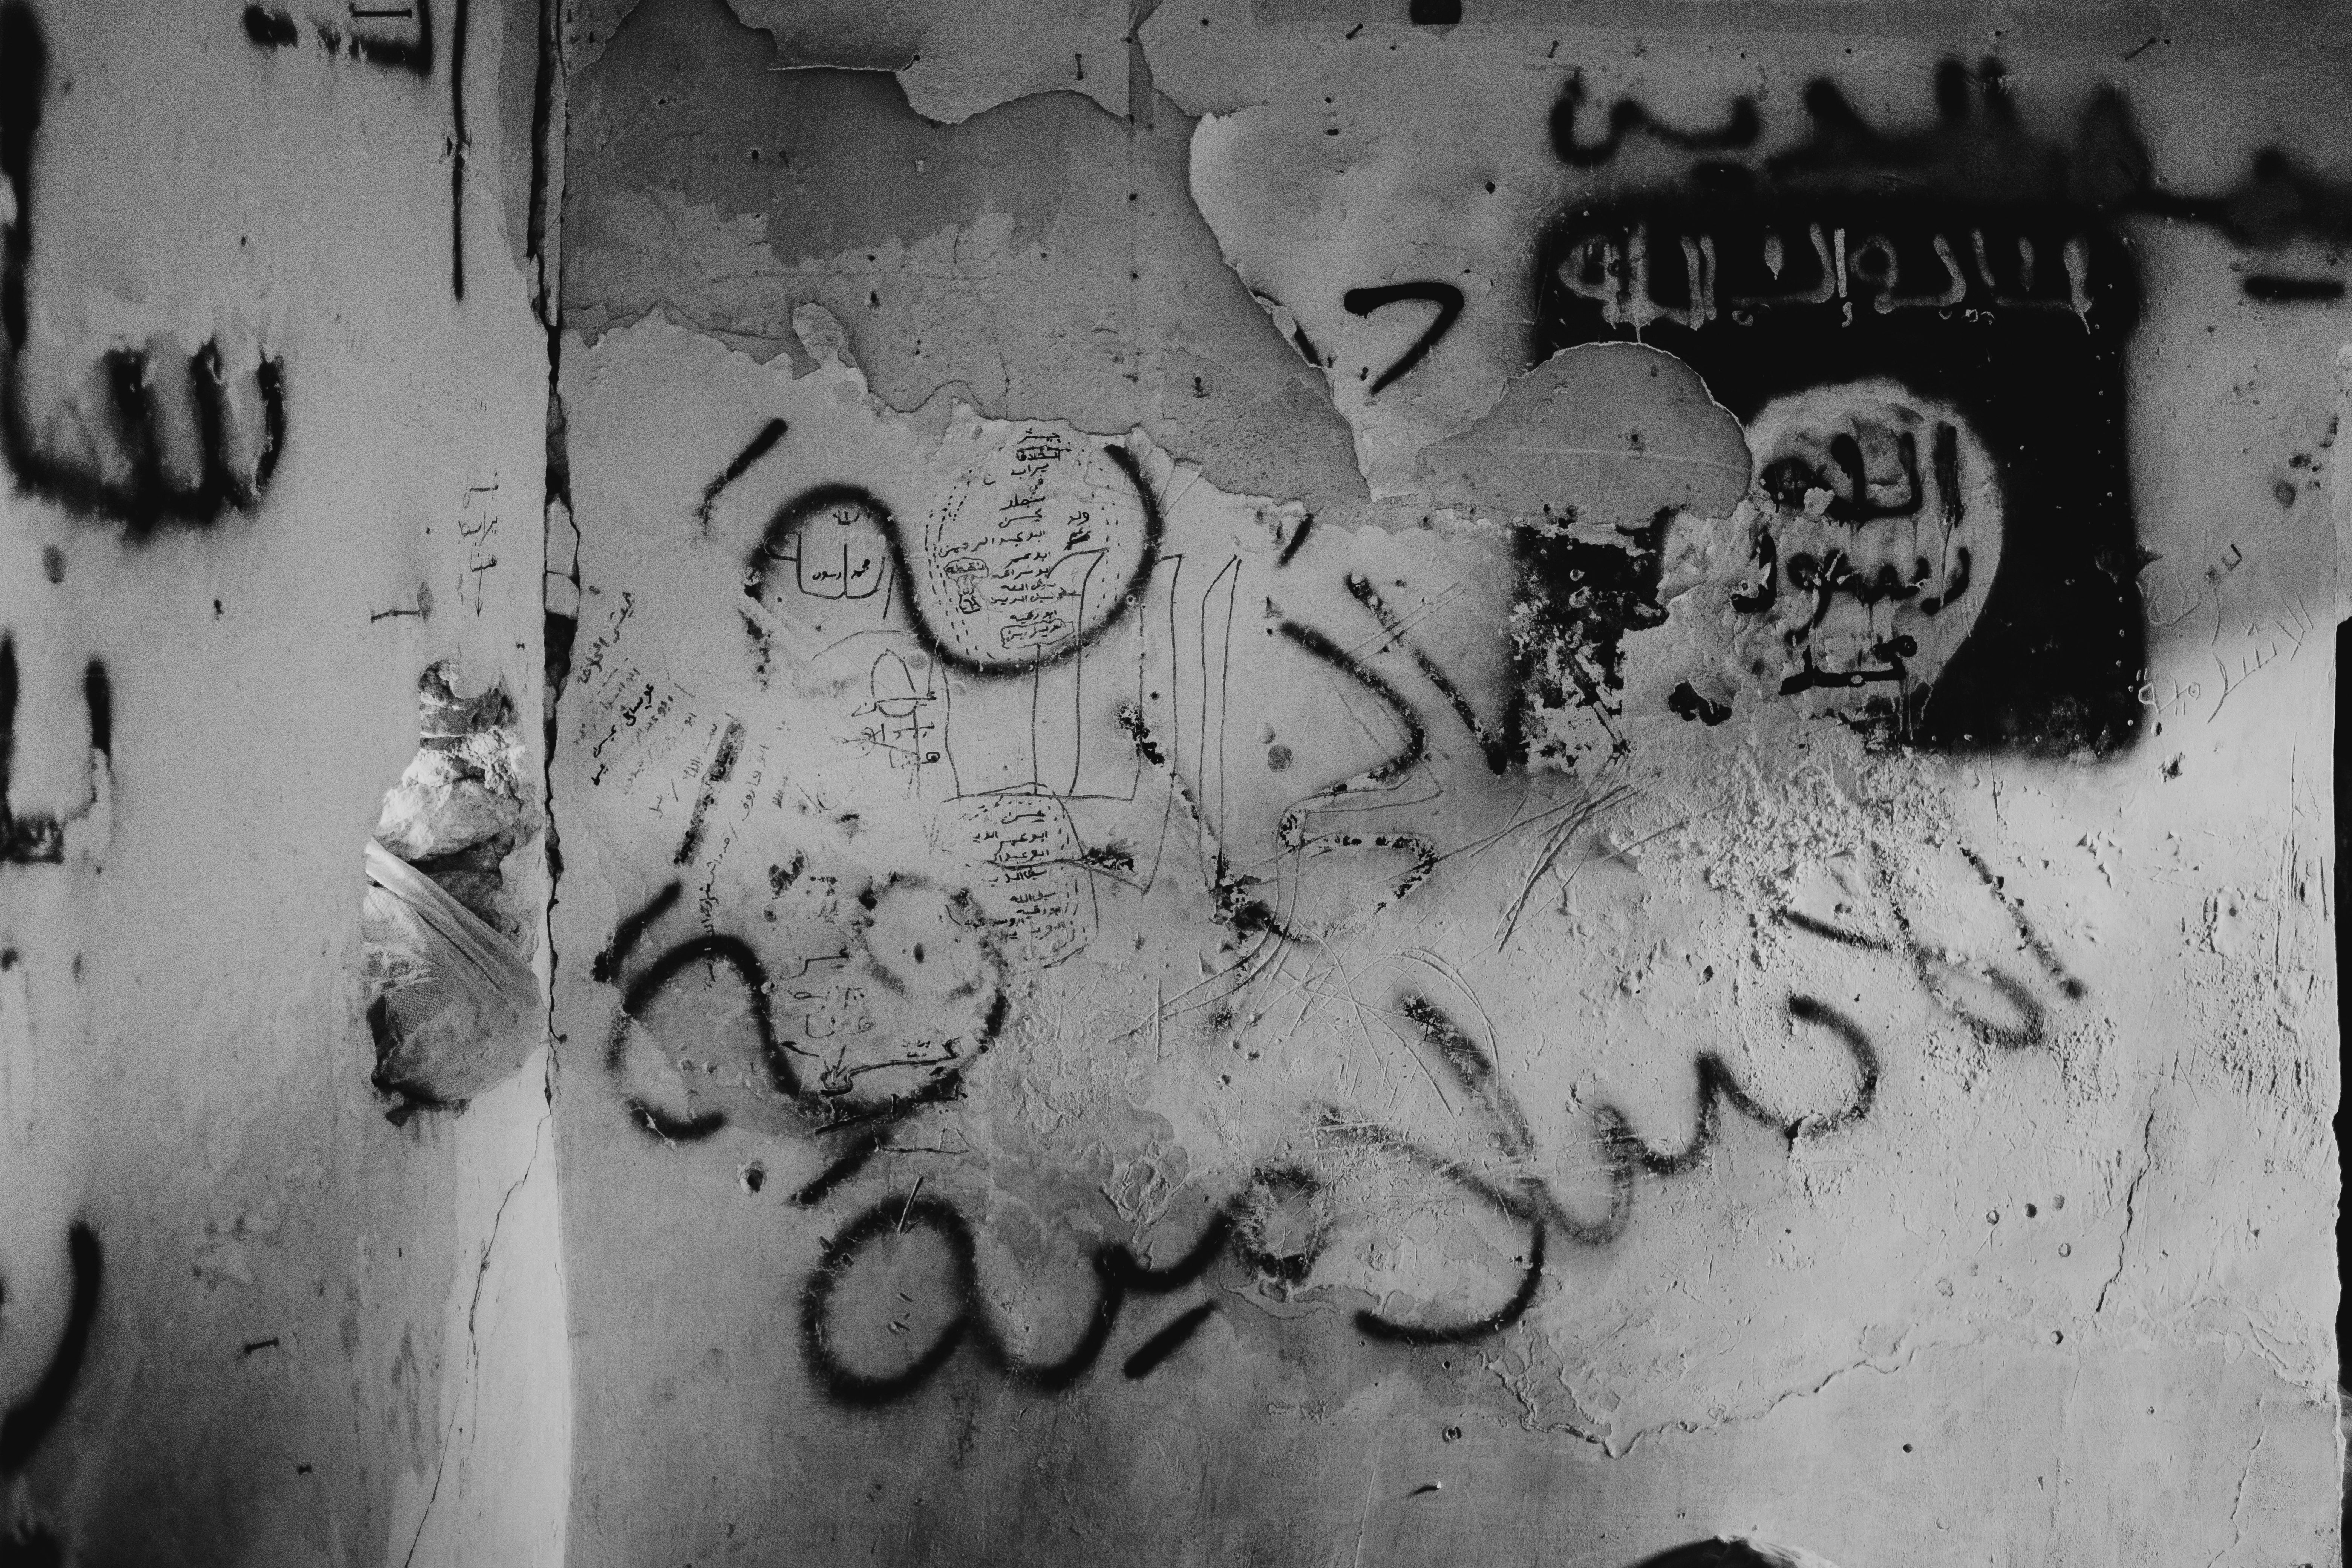 Islamic State flag graffiti on a wall. : Levi Clancy, via Wikimedia Commons CC0